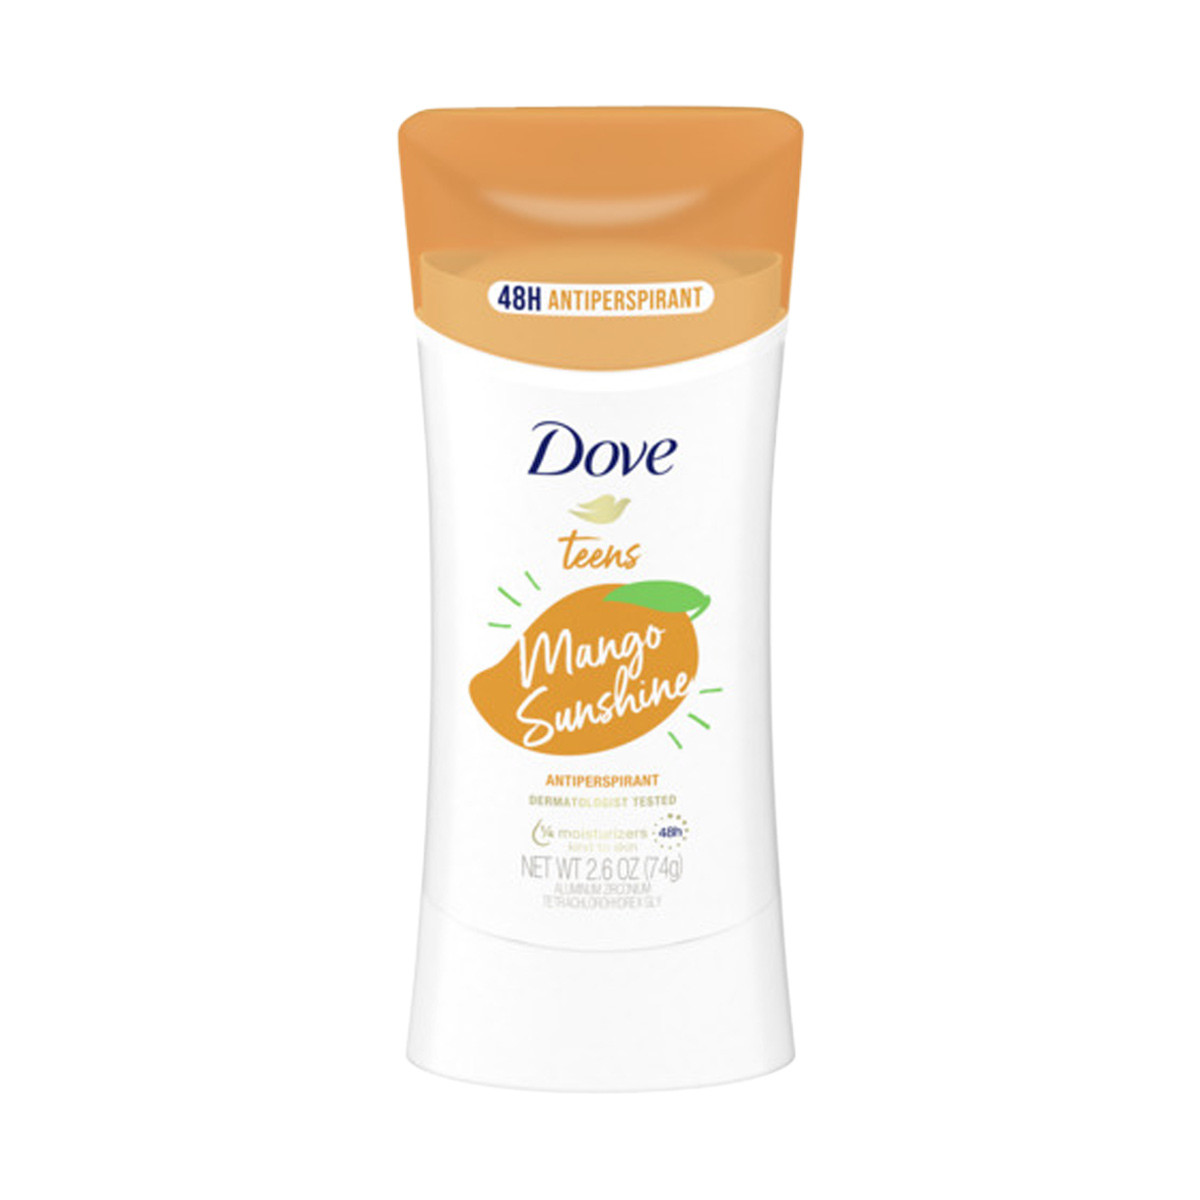 Dove Teens Antiperspirant Deodorant Stick, Mango Sunshine, 2.6 oz